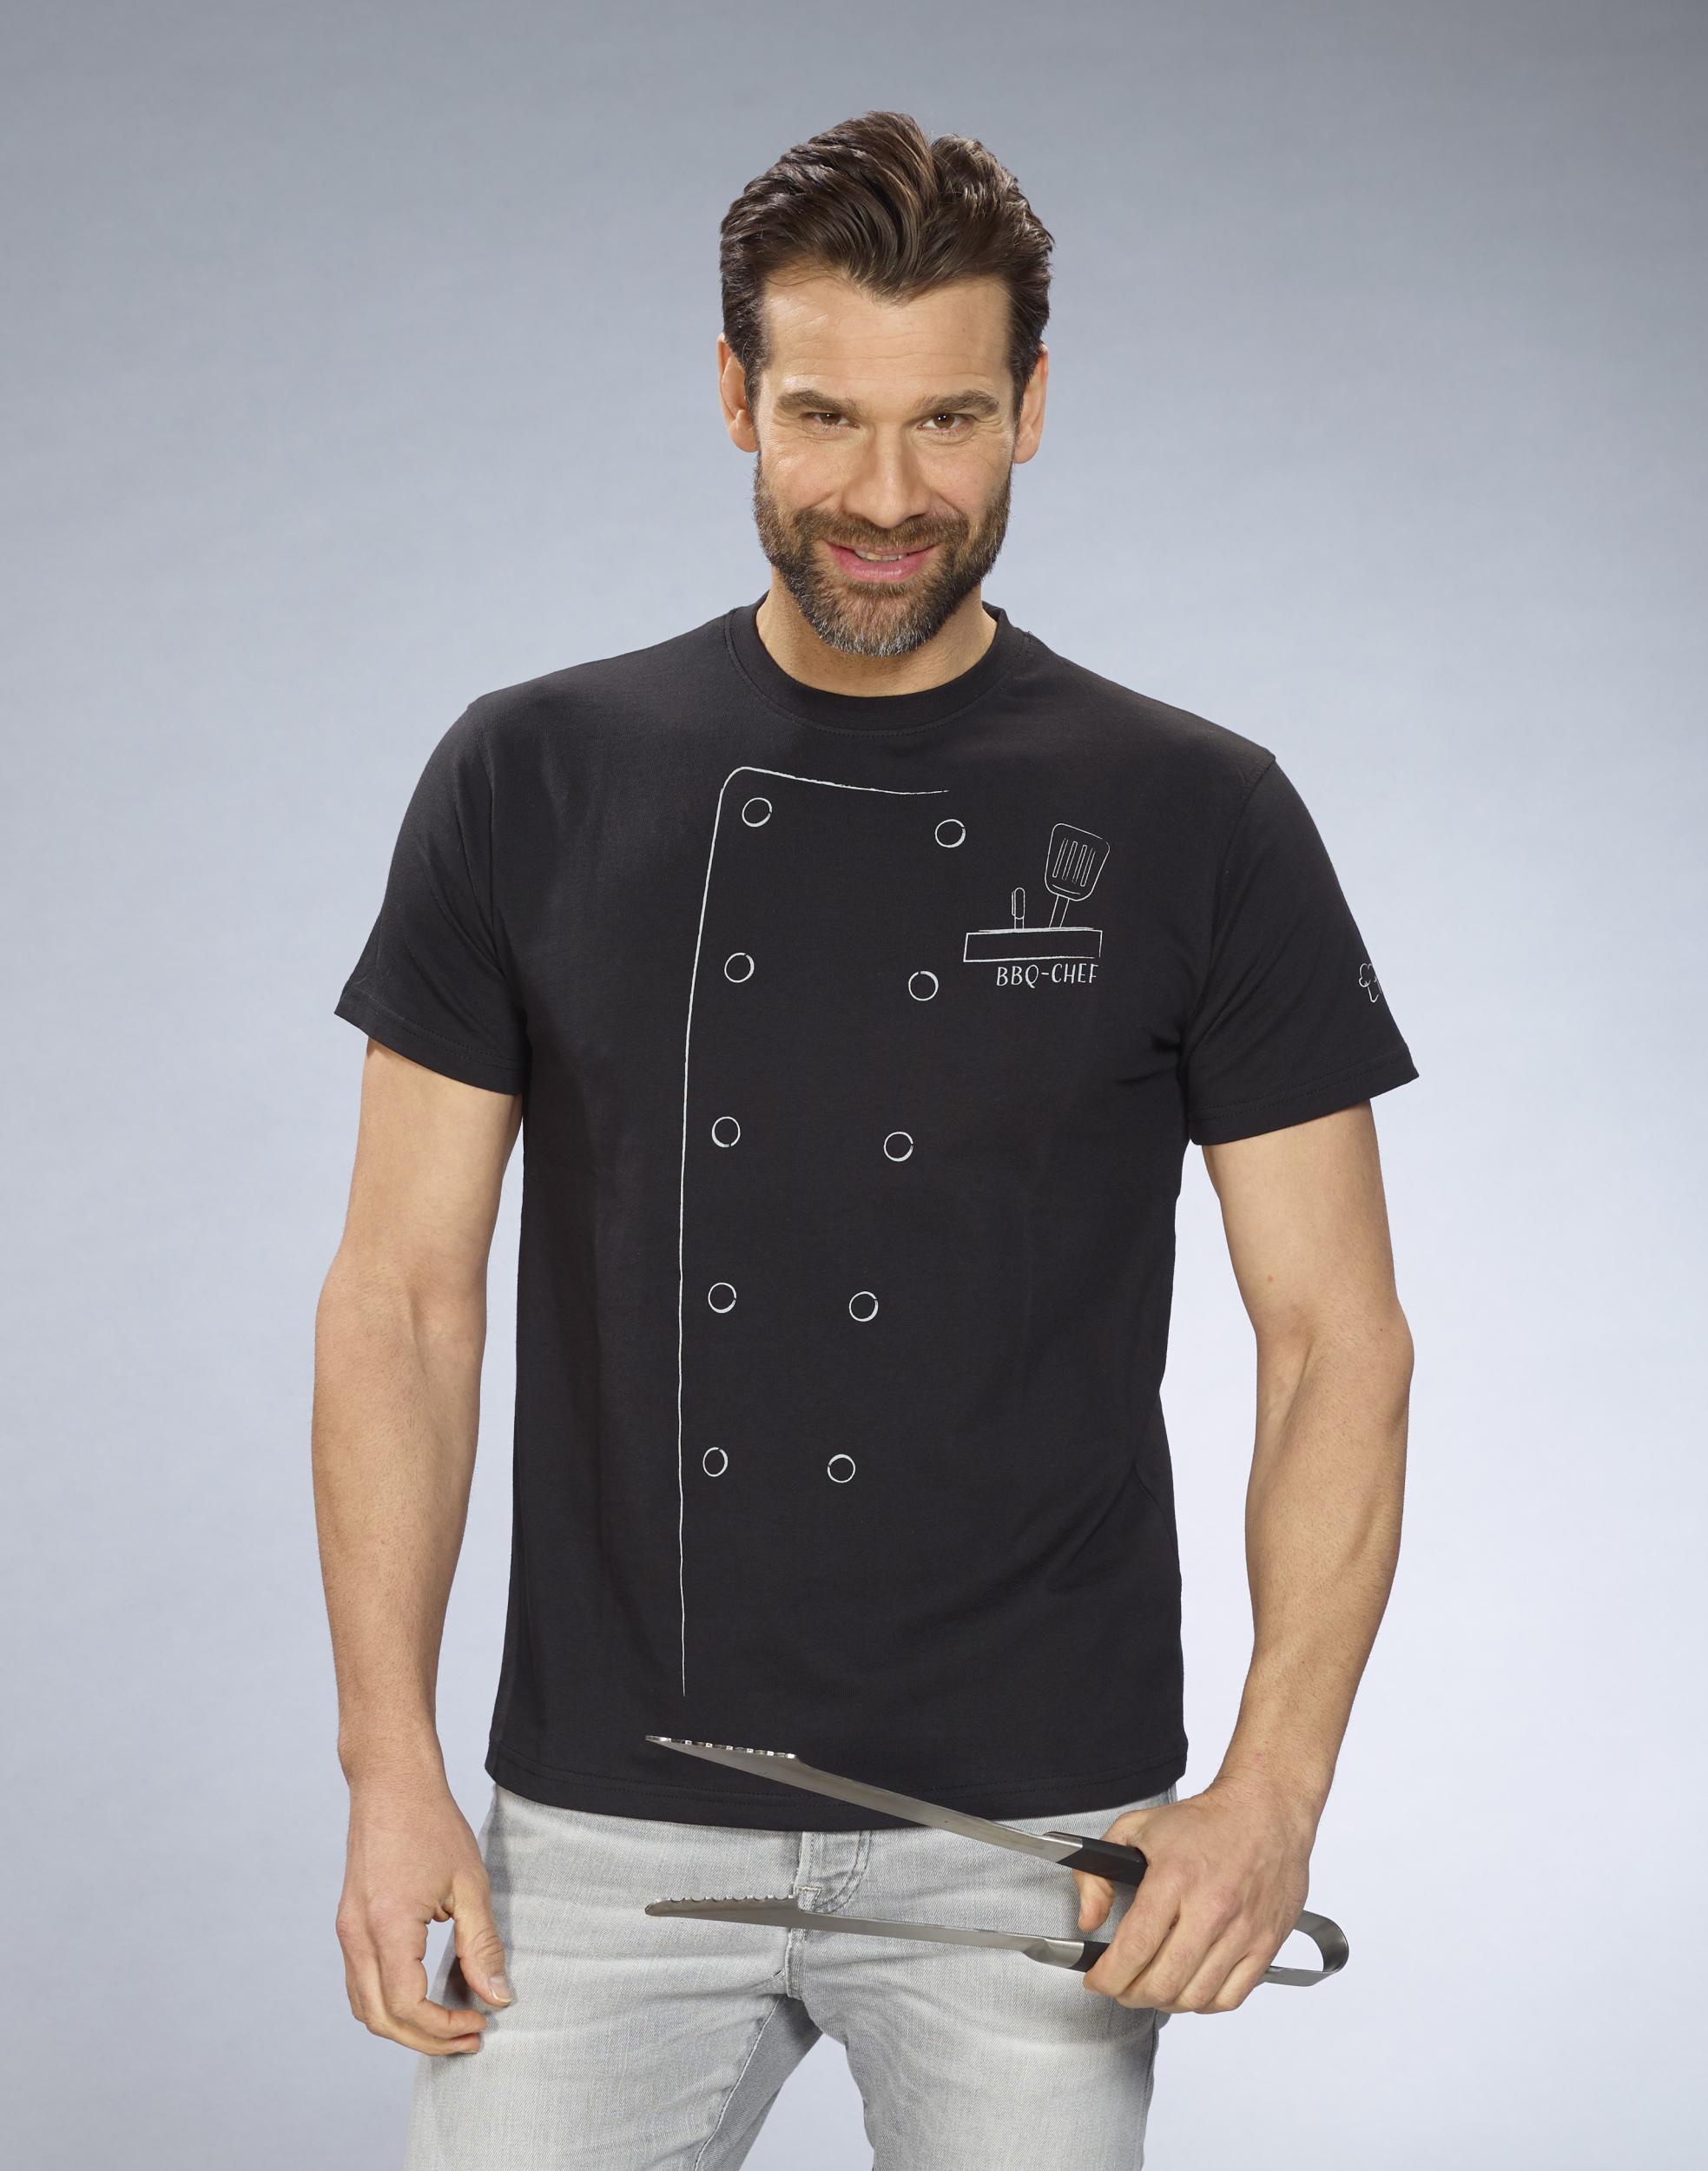 T-Shirt Grillmeister, Farbe schwarz, Gr.3XL